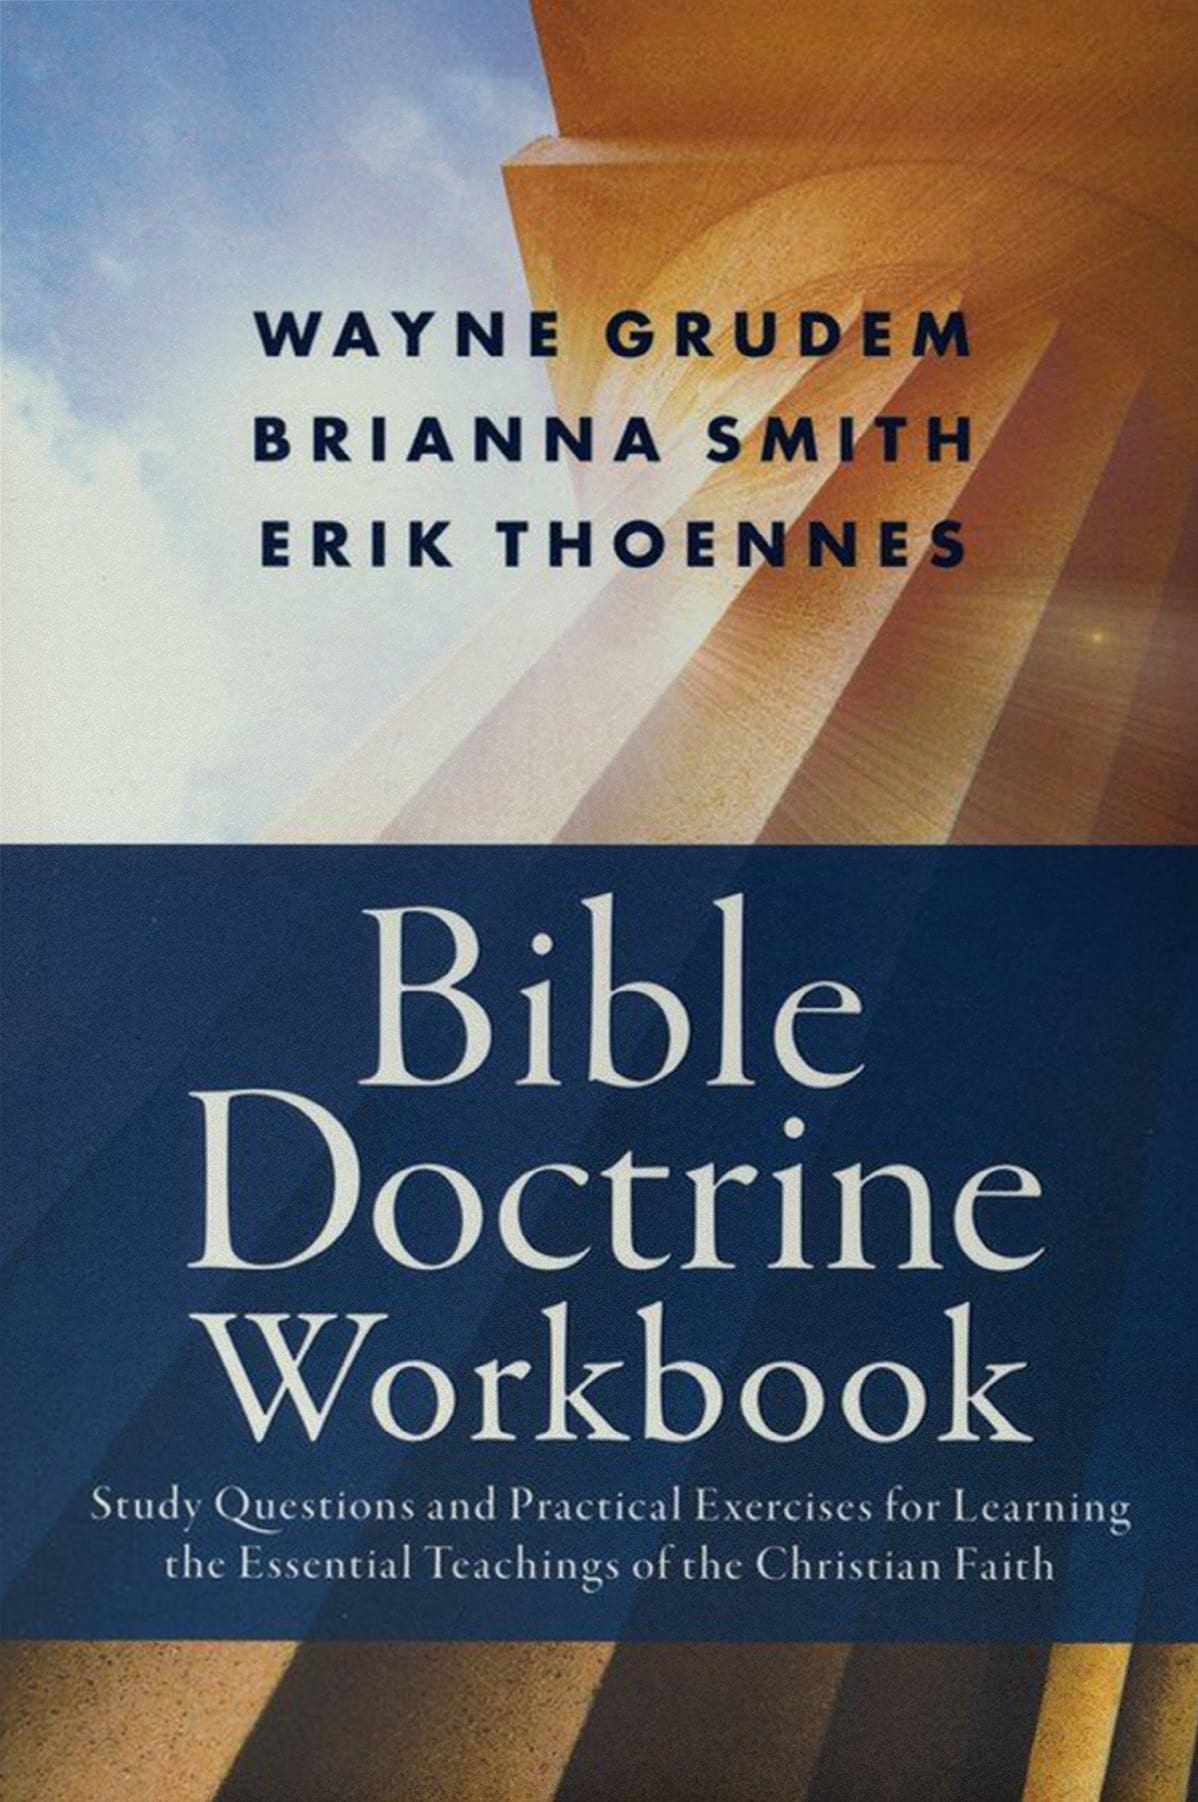 bible-doctrine-workbook2